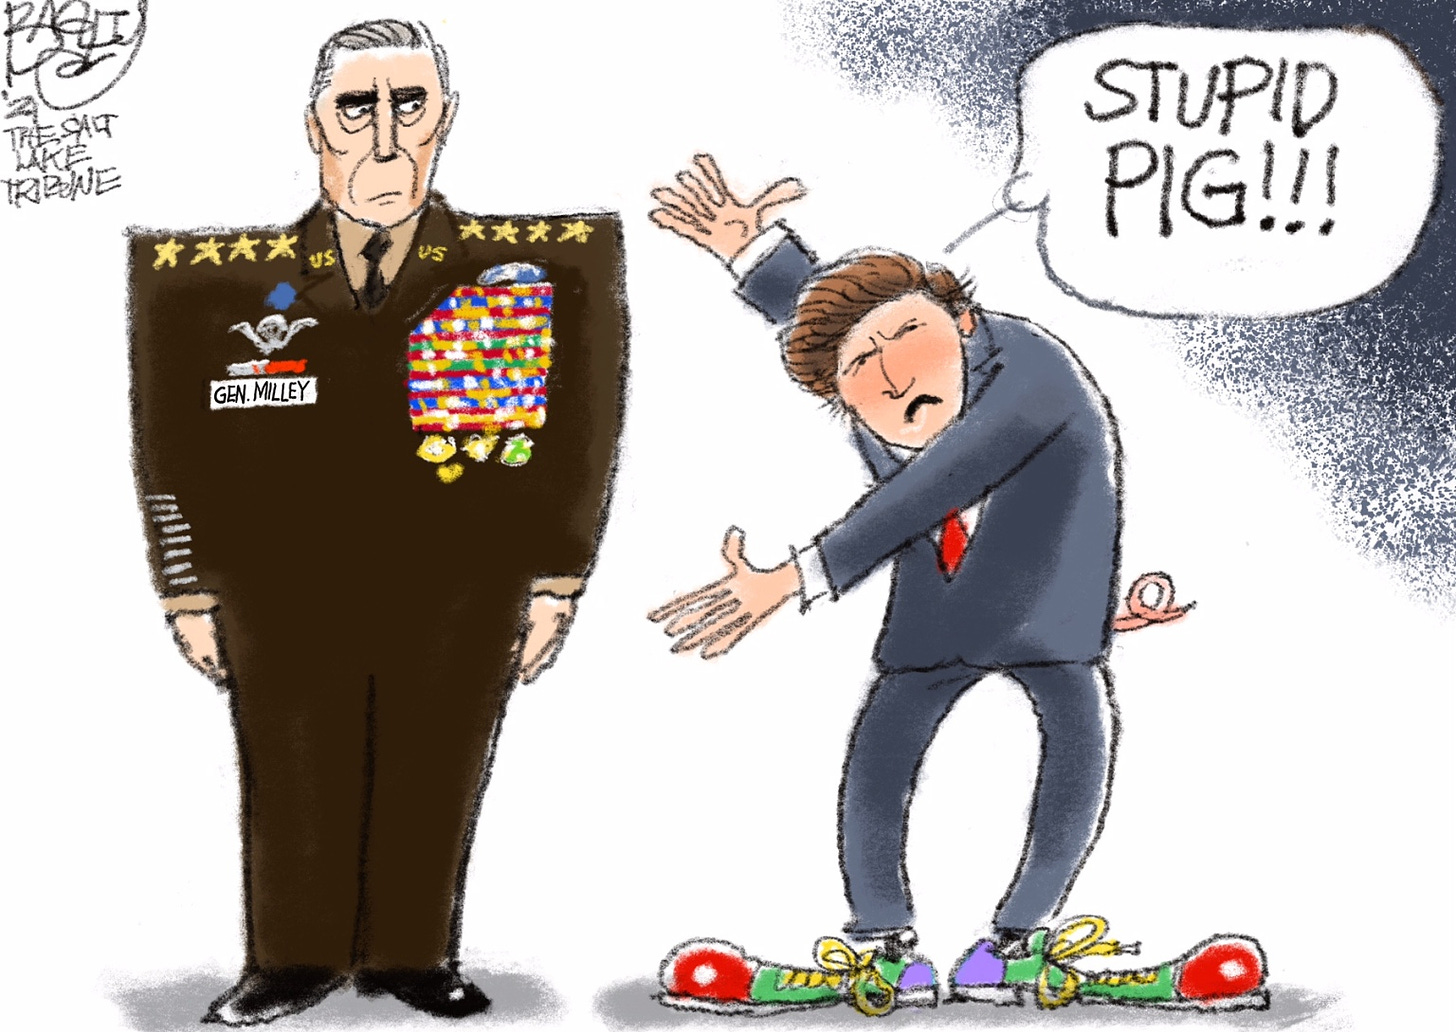 Tucker Carlson trashes American military but praises Putin